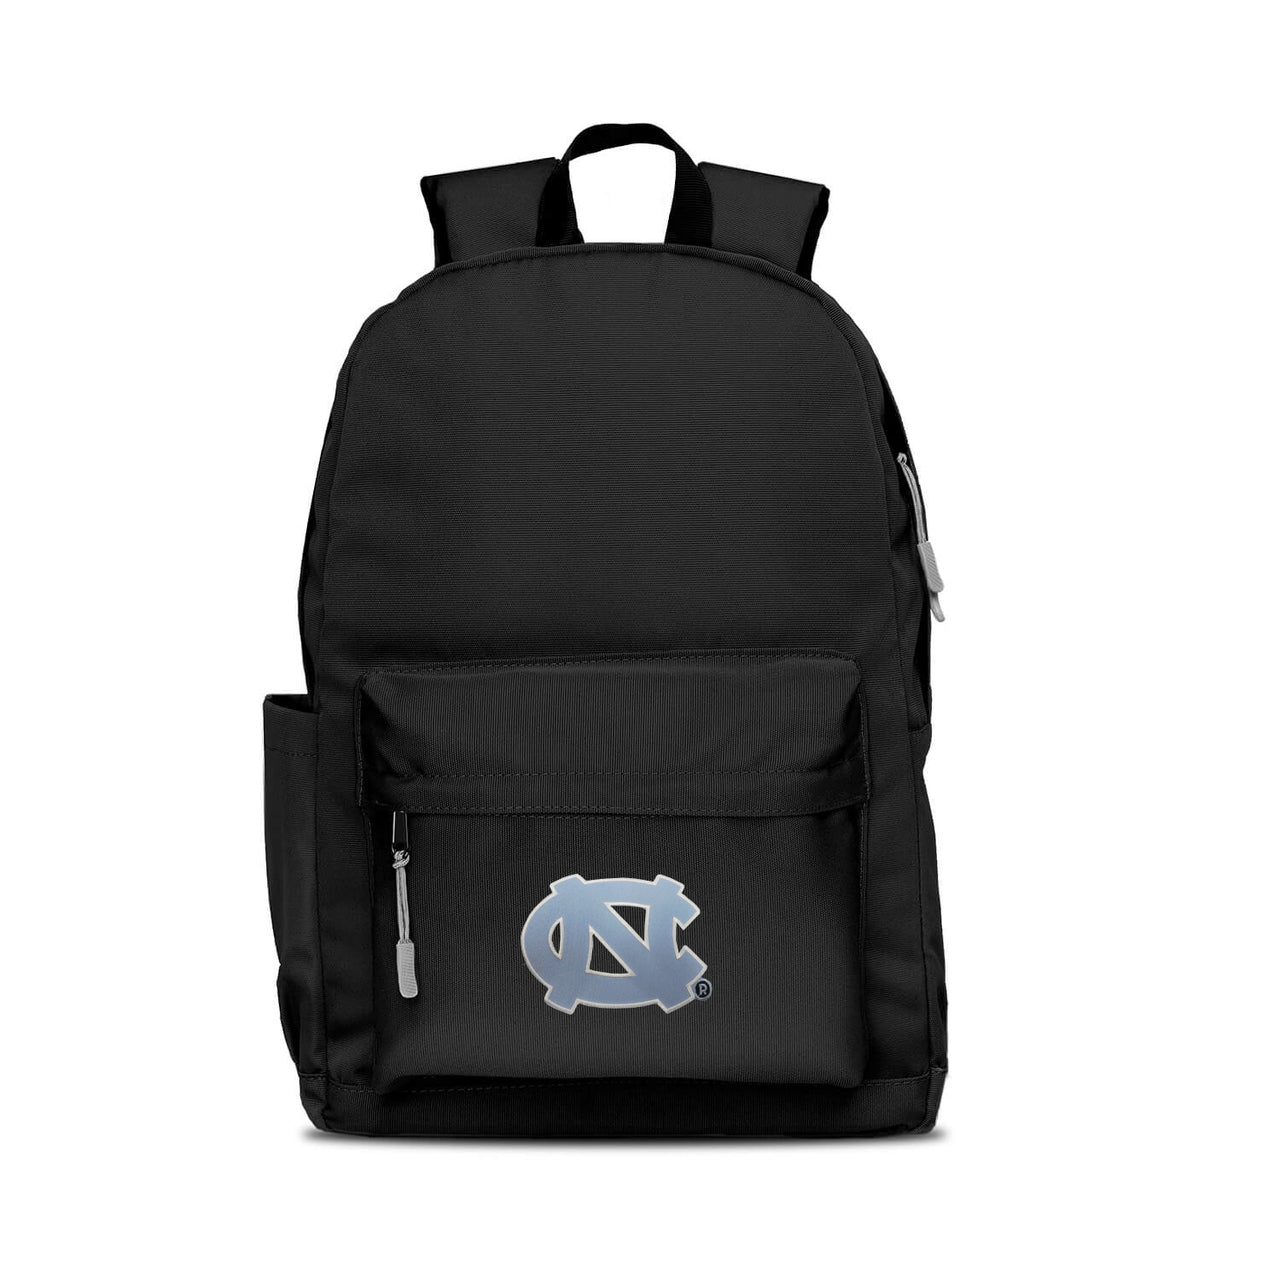 North Carolina Tar Heels Campus Laptop Backpack- Black